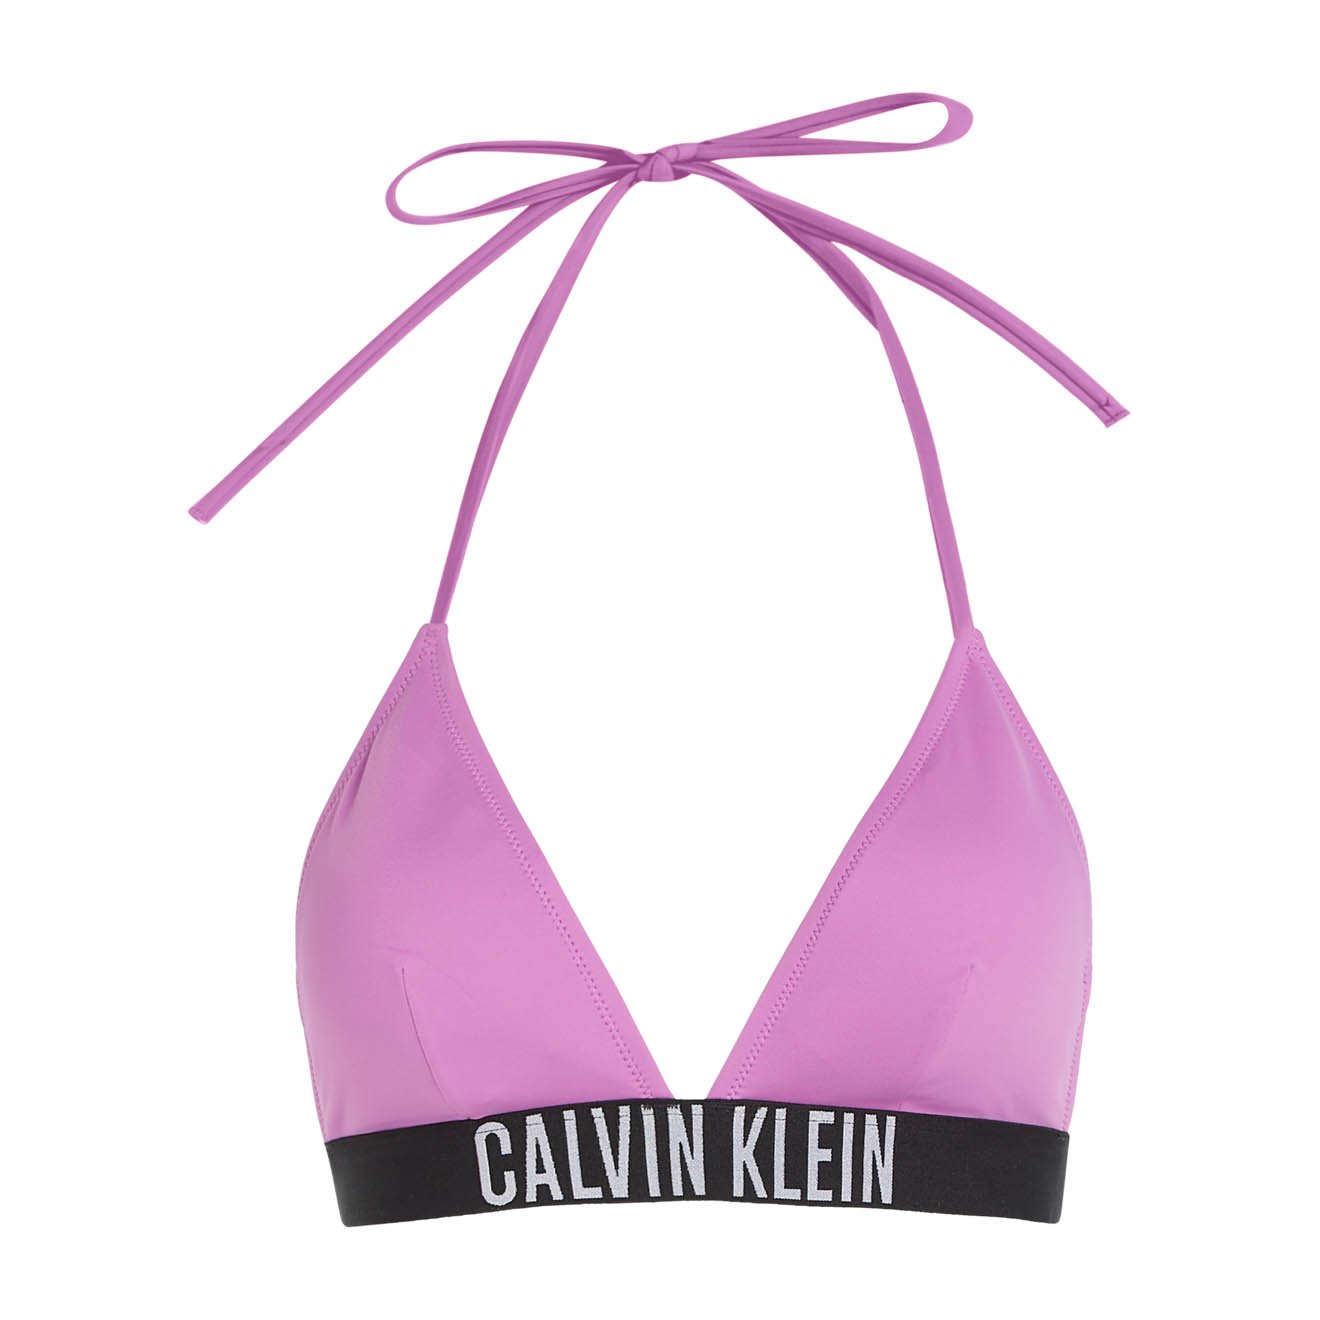 optillen omhelzing ideologie Roermond Calvin Klein Underwear aanbiedingen